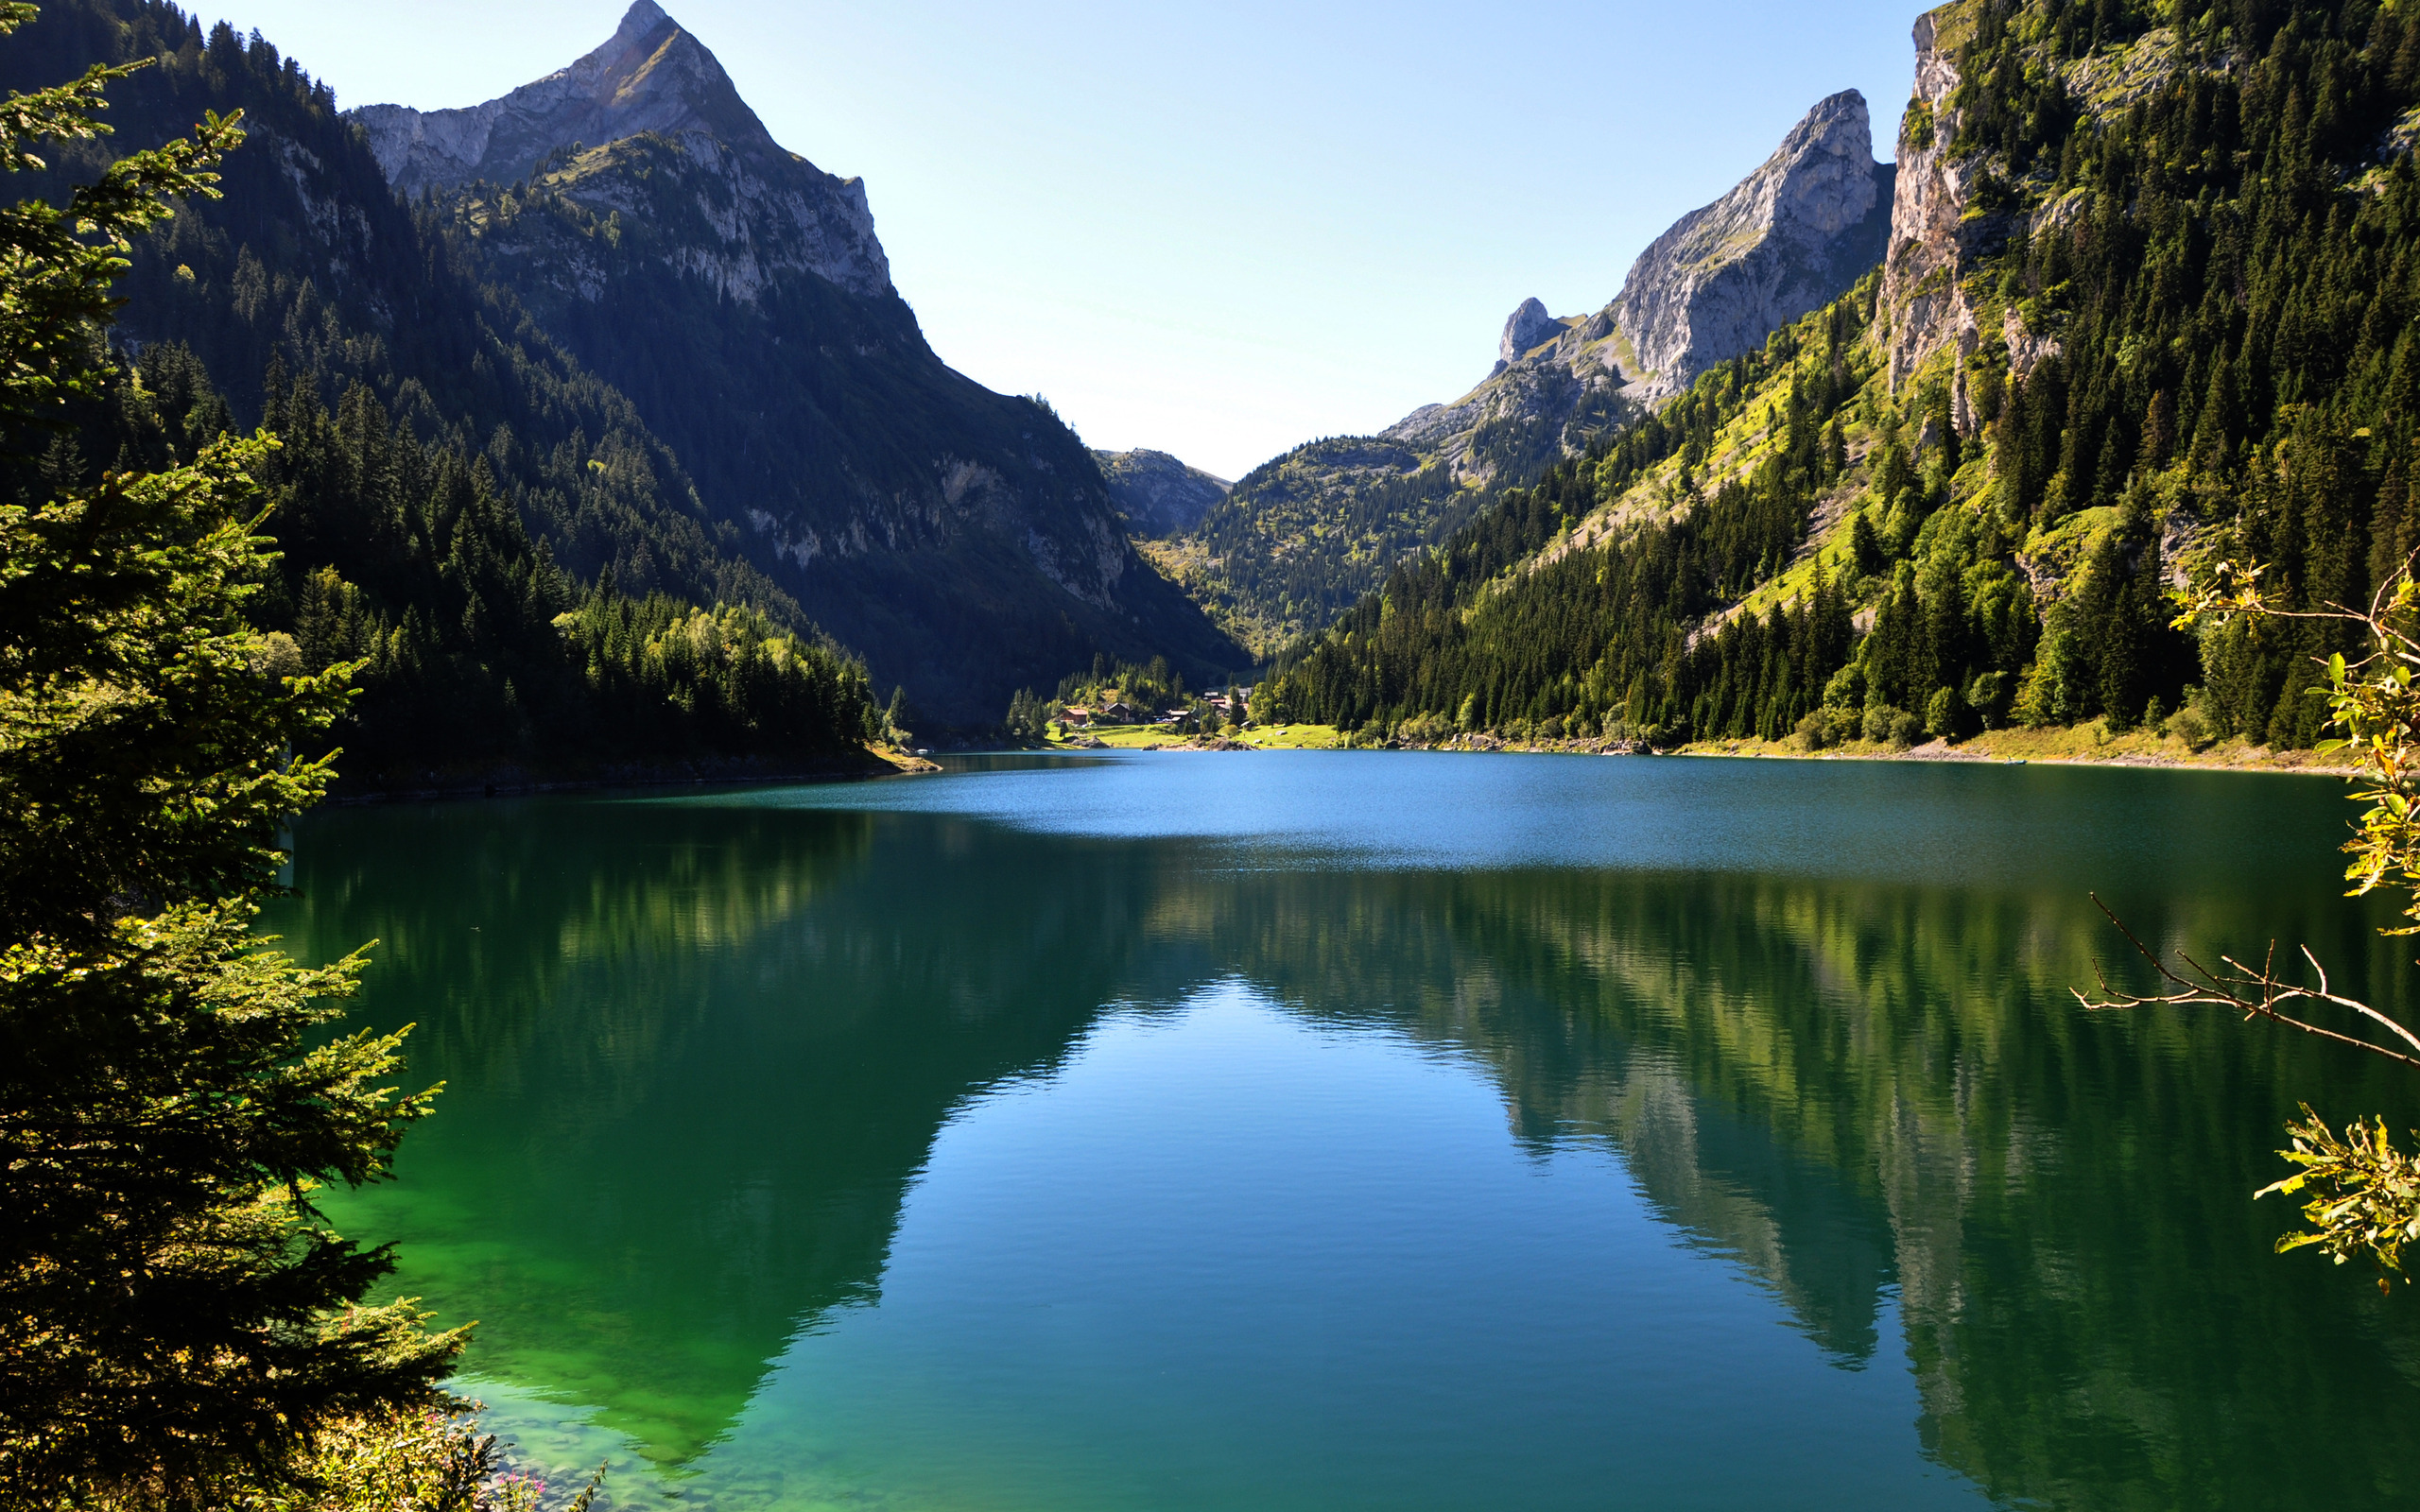 Best Mountain HD Wallpaper Lake Between Green Mountains